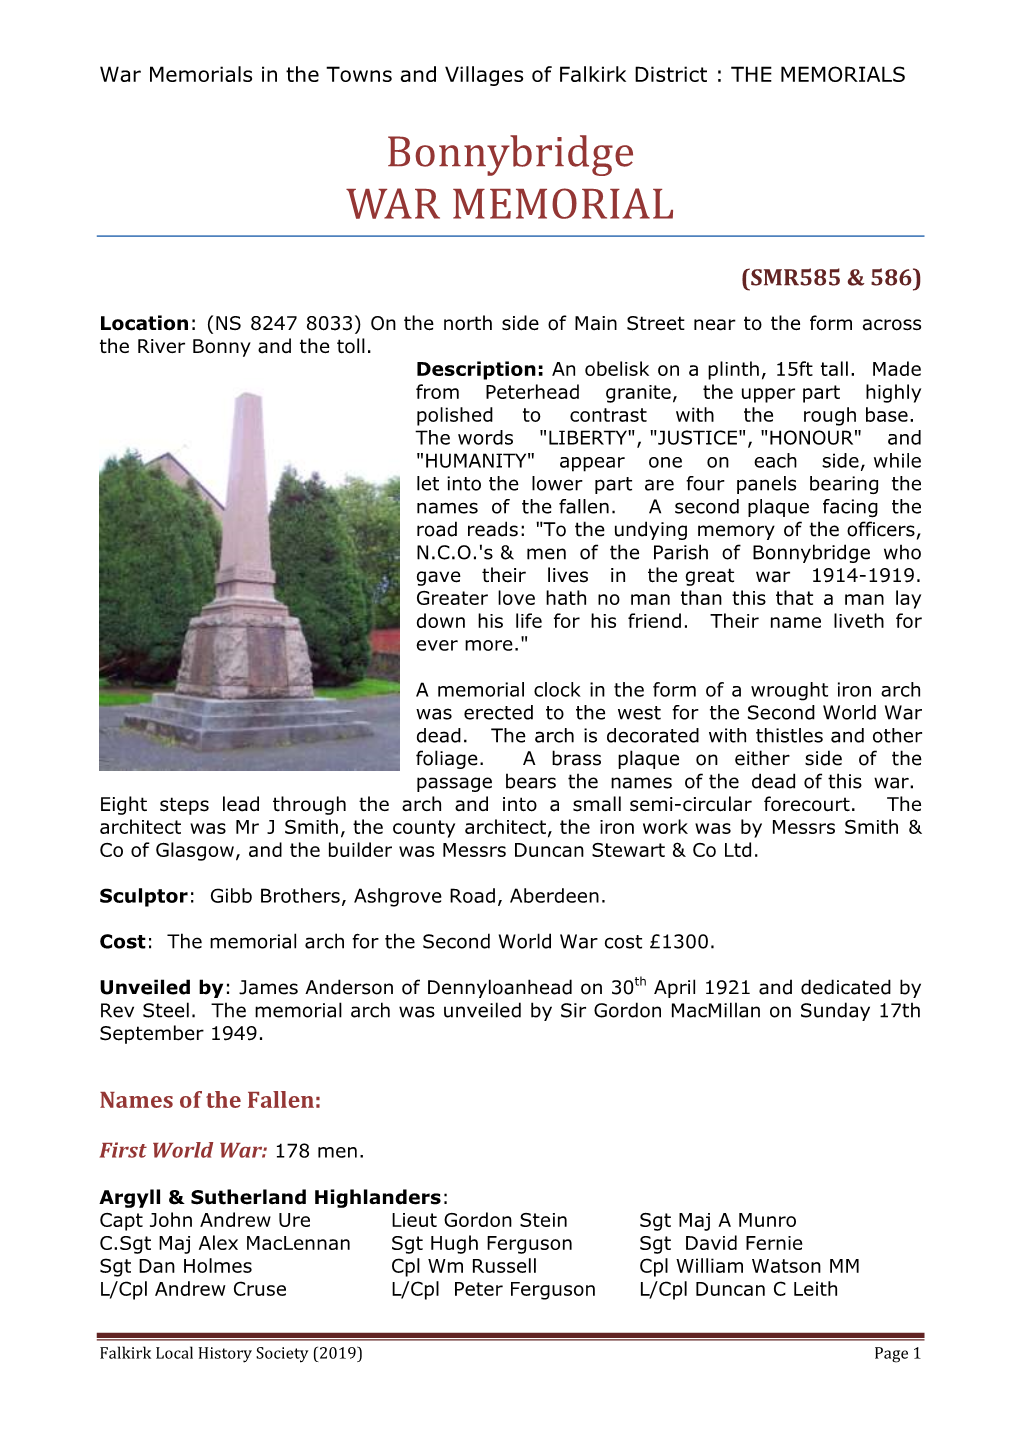 Bonnybridge WAR MEMORIAL